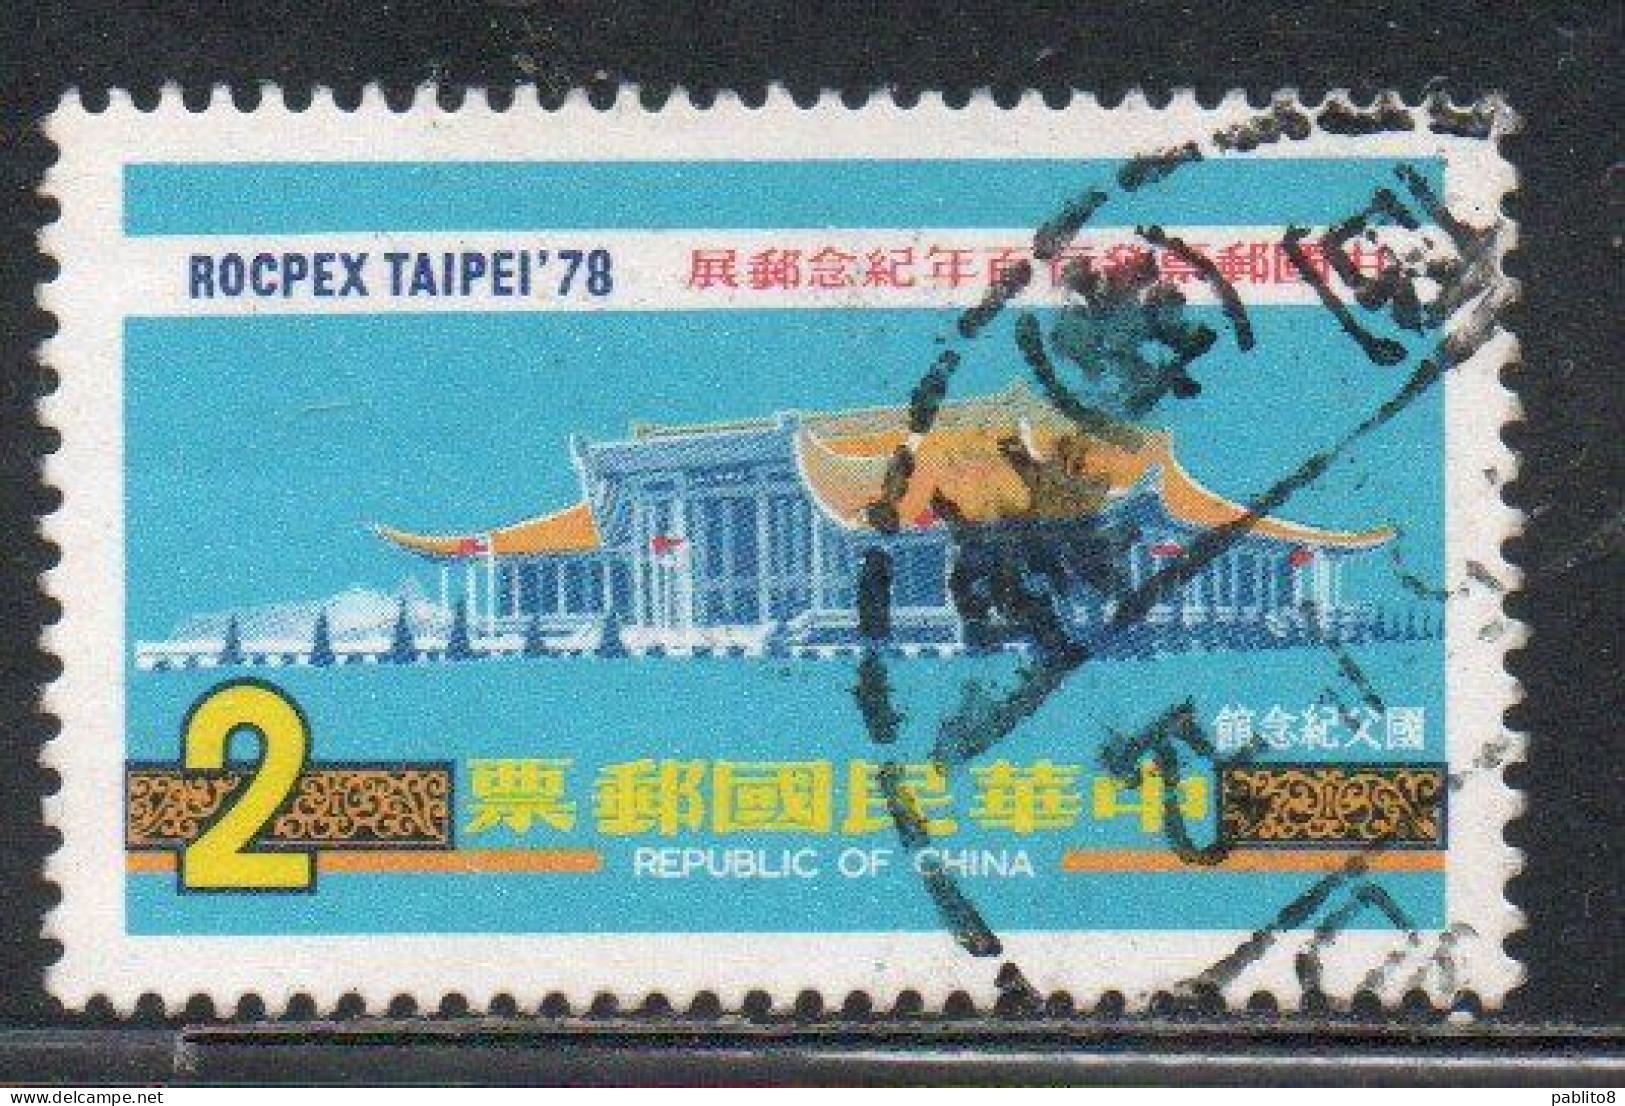 CHINA REPUBLIC CINA TAIWAN FORMOSA 1978 ROCPEX78 PHILATELIC EXHIBITION SUN YAT-SEN MEMORIAL HALL 2$ USED USATO OBLITERE' - Oblitérés